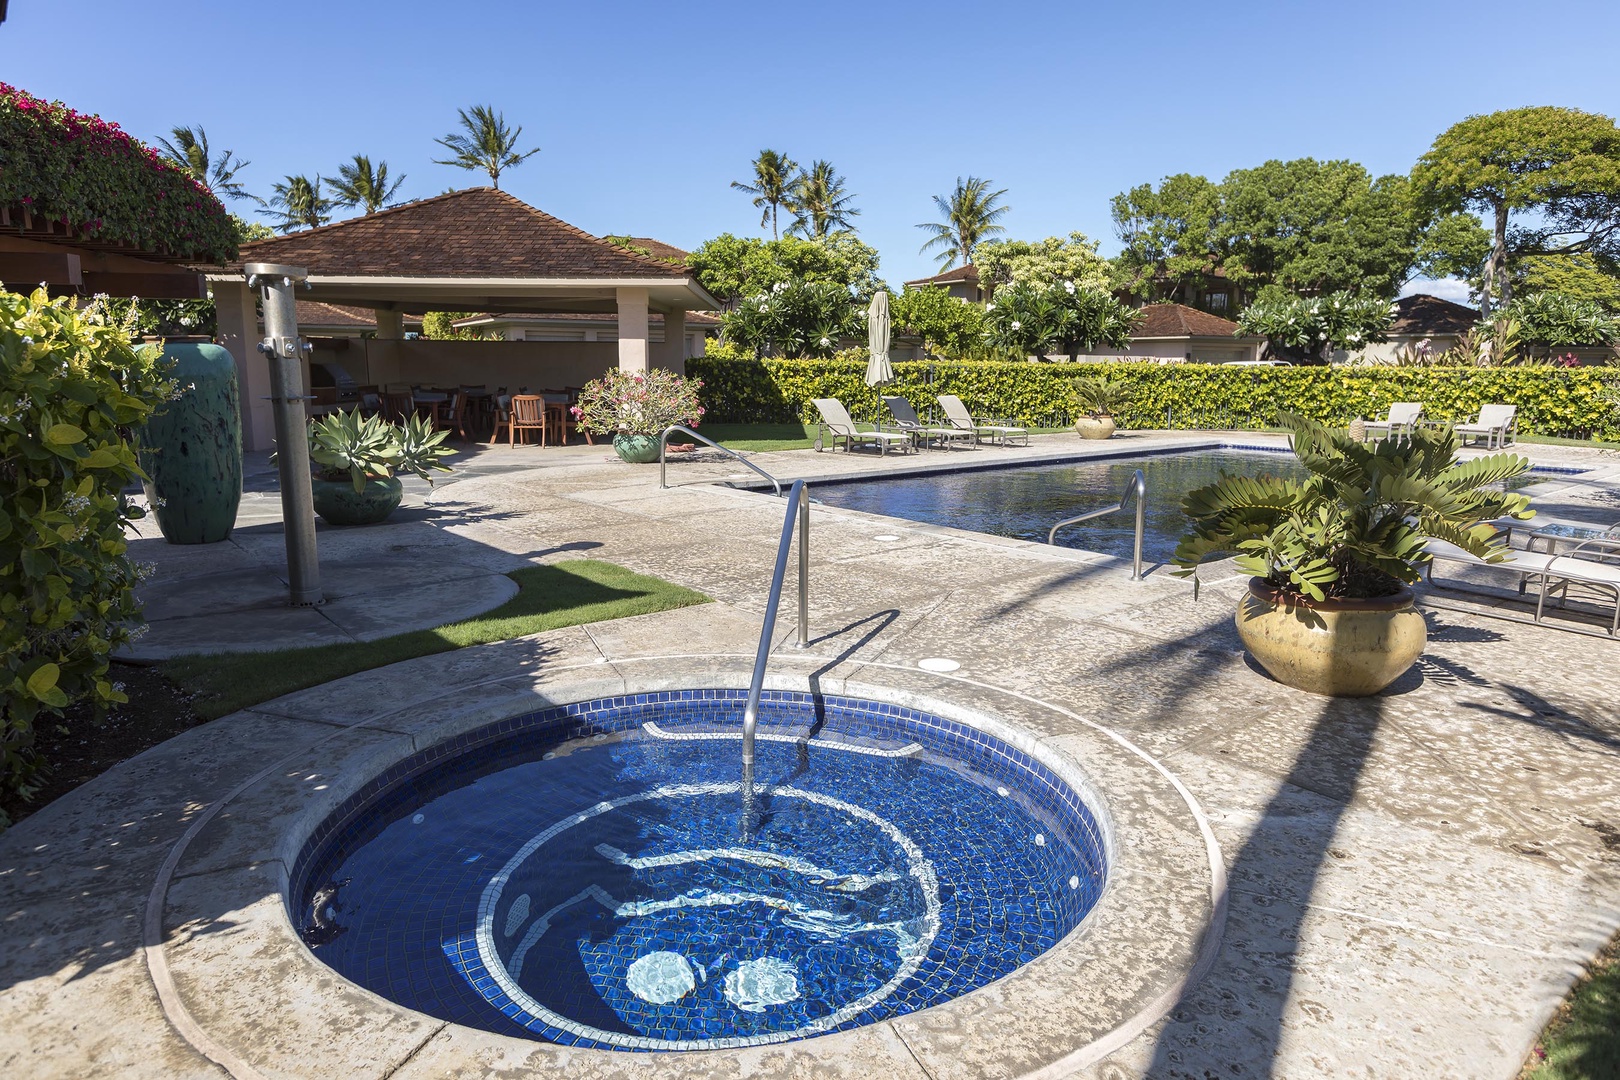 Kailua Kona Vacation Rentals, Hillside Villa 7101 - Heated Spa at the community pool